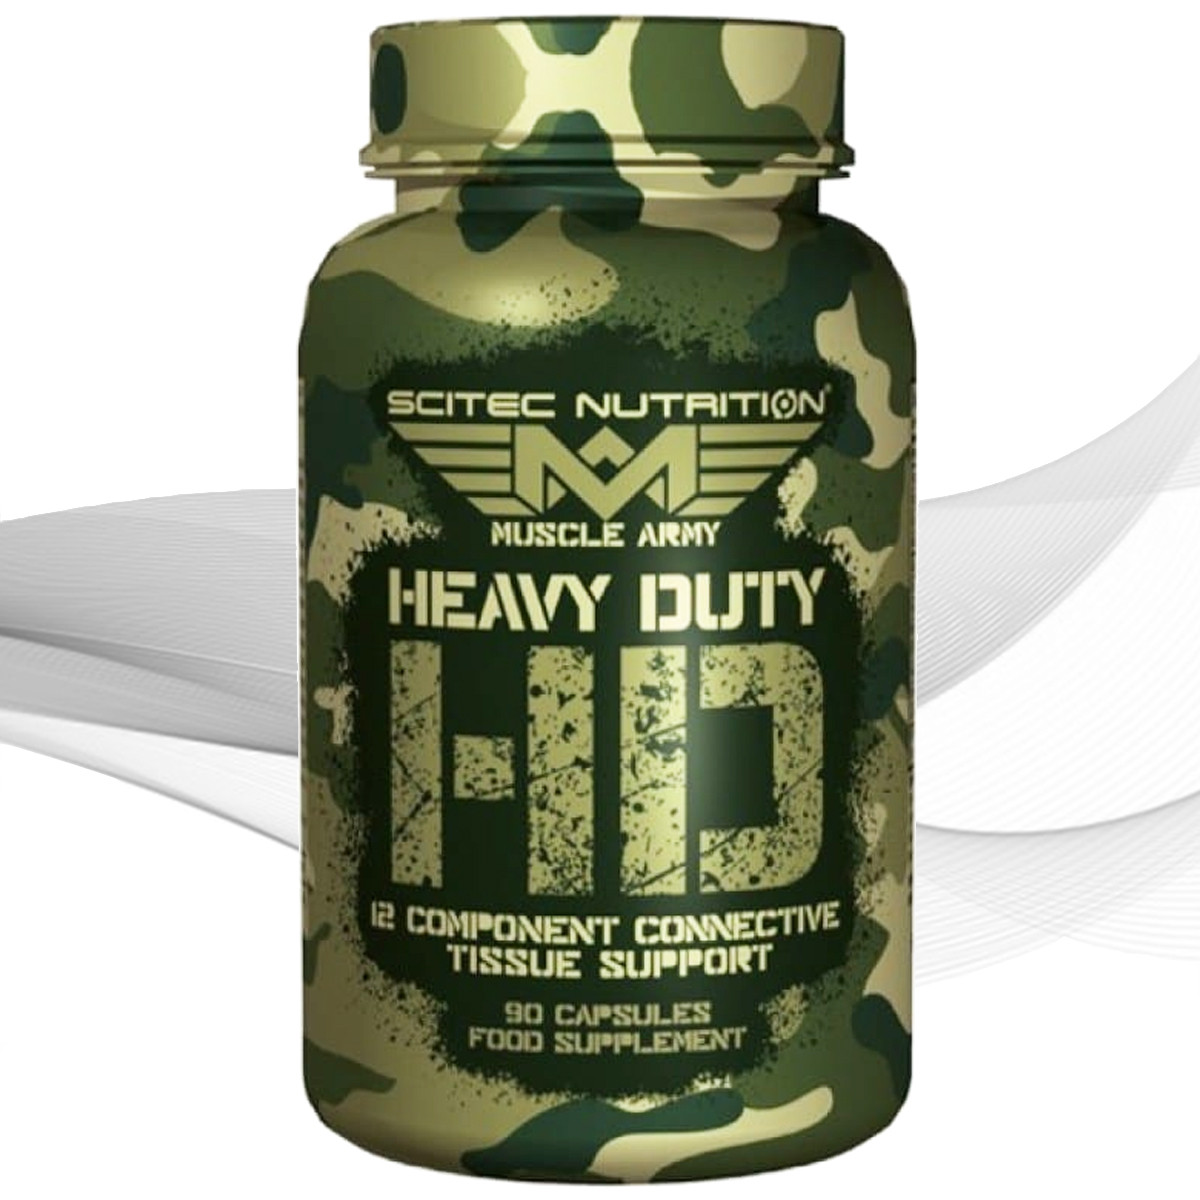 Scitec Nutrition Heavy Duty 90 caps.